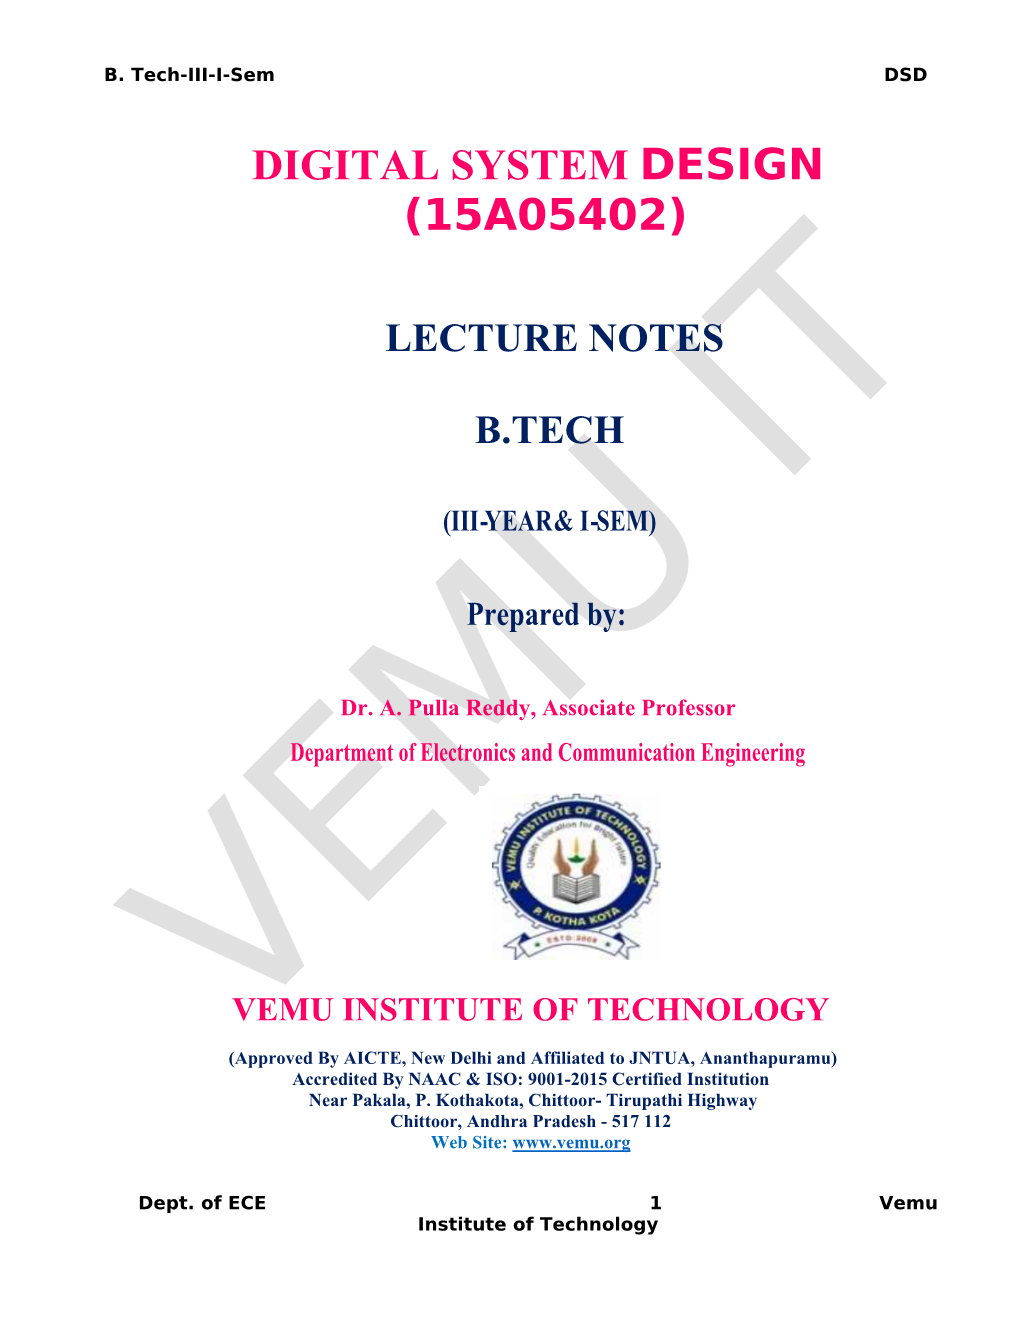 Digital System Design (15A05402)